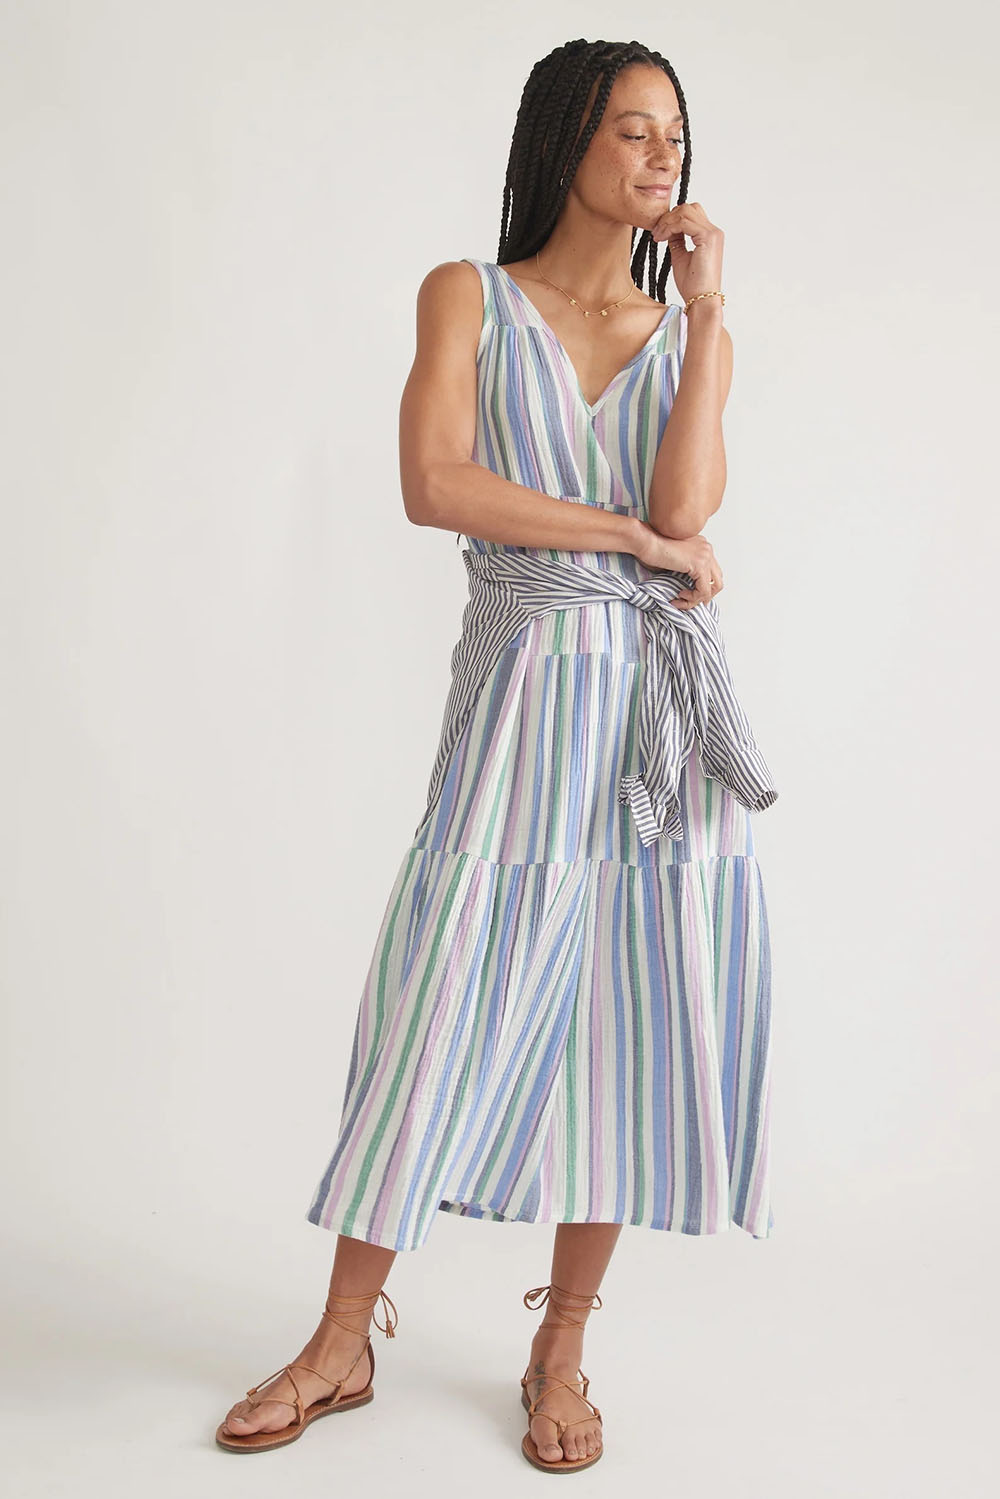 Marine Layer - Corinne Maxi Dress - Multi Cool Stripe